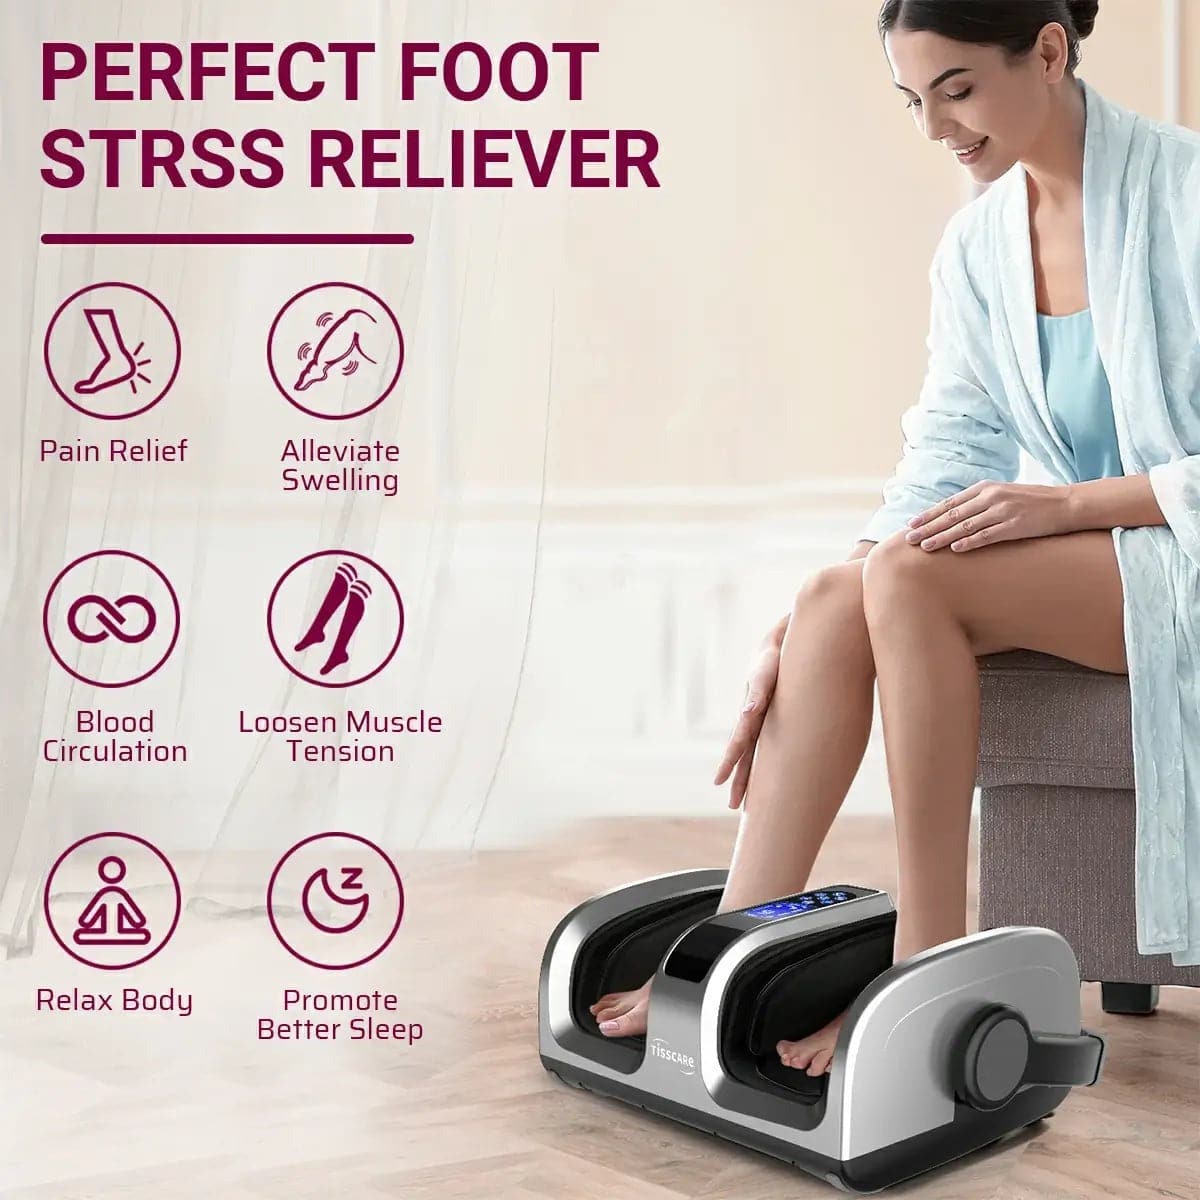 TISSCARE 2023 Upgrade Shiatsu Foot Massager Machine